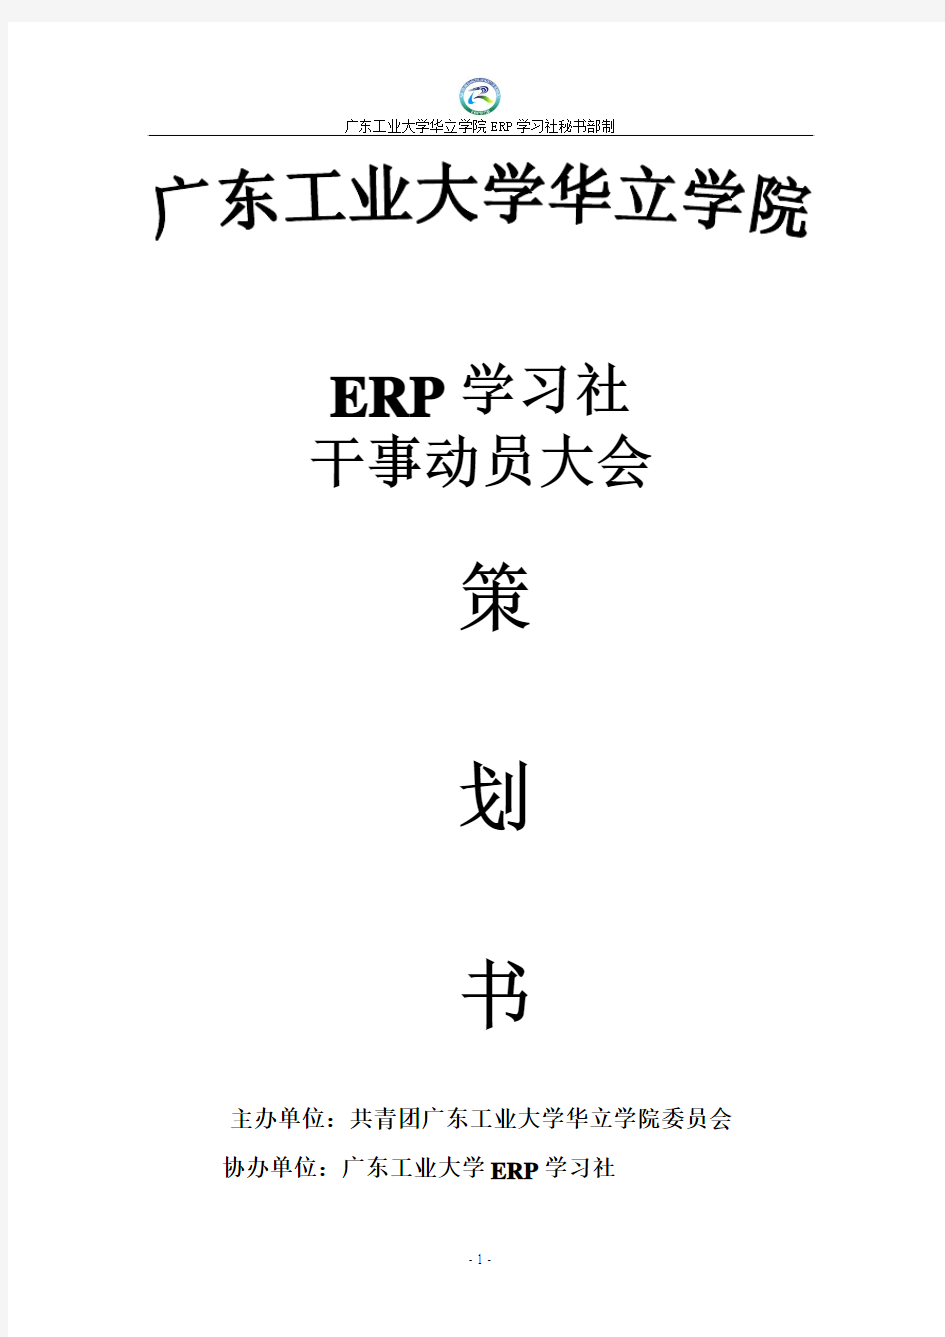 ERP学习社 11届会员动员大会